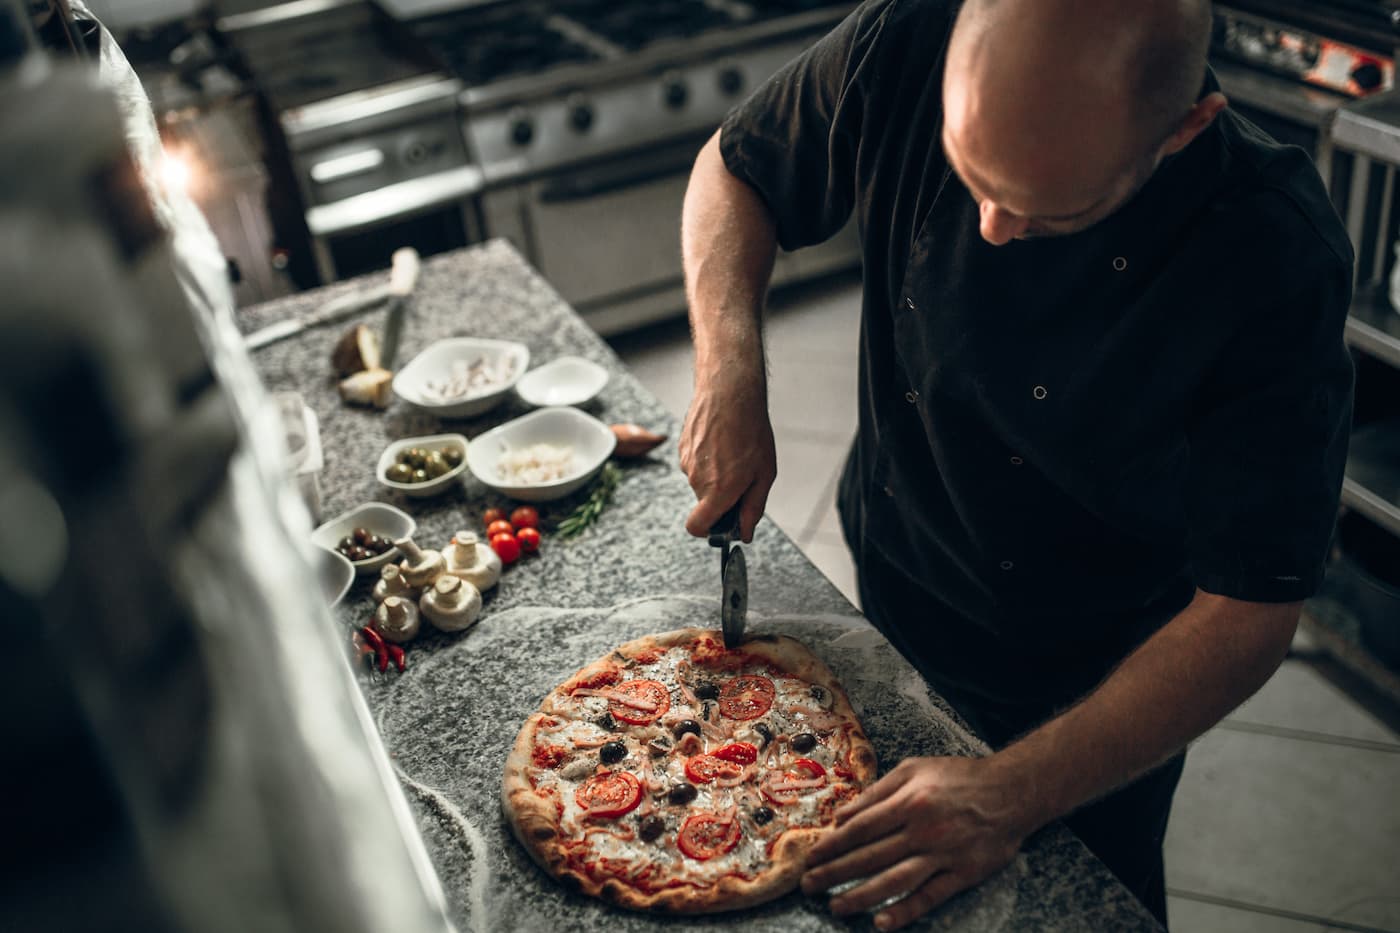 Chef cutting a pizza